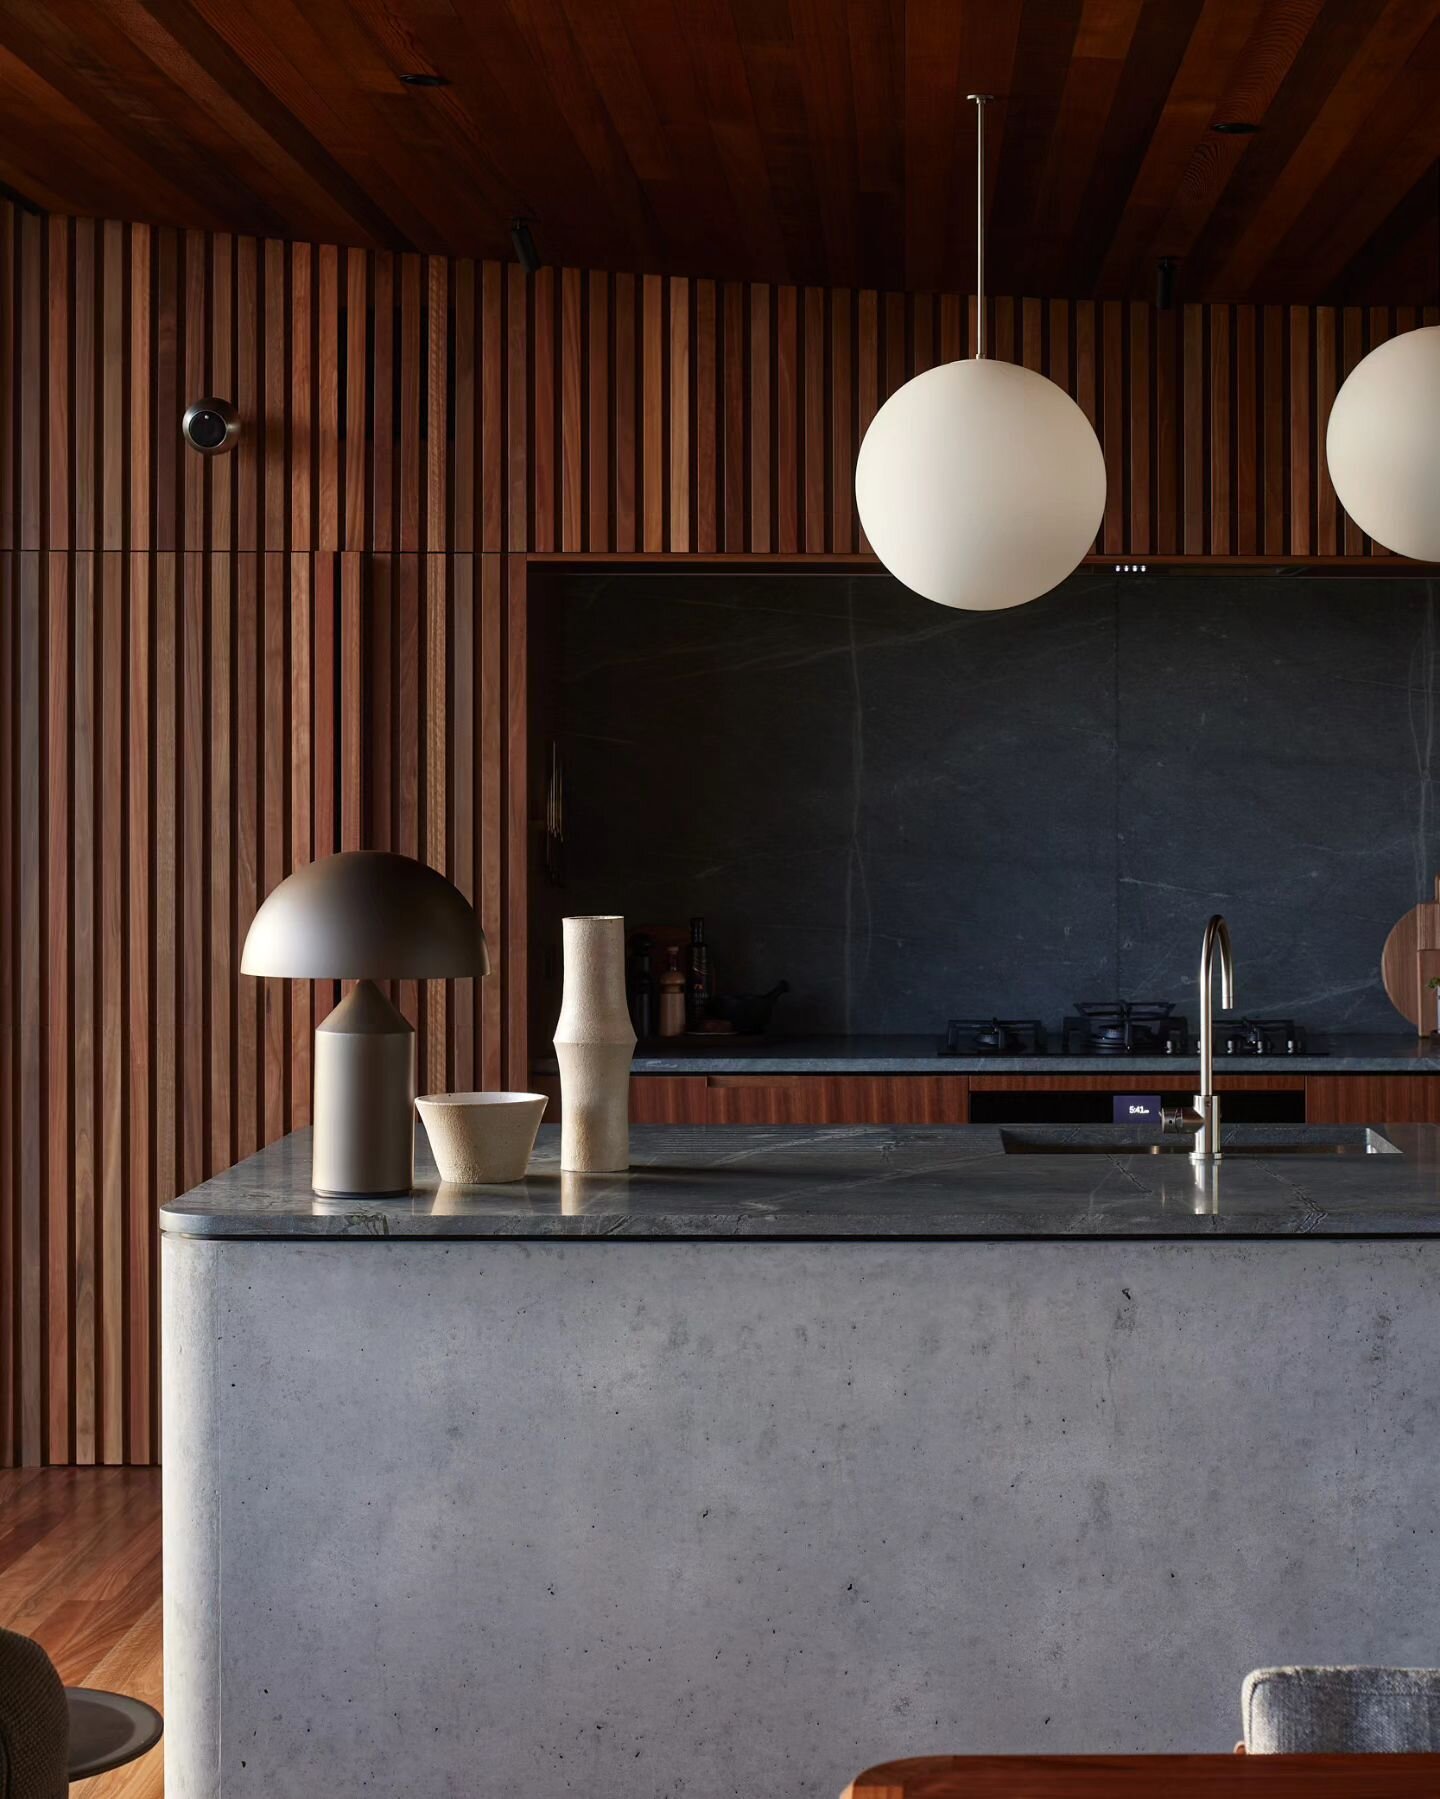 Tove vase and bowl in beautiful dwelling - Herbst Architects - Omata beach house
@herbstarchitects

@hi_kaukau @simonjamesstore 

Photo by @simon.c.wilson